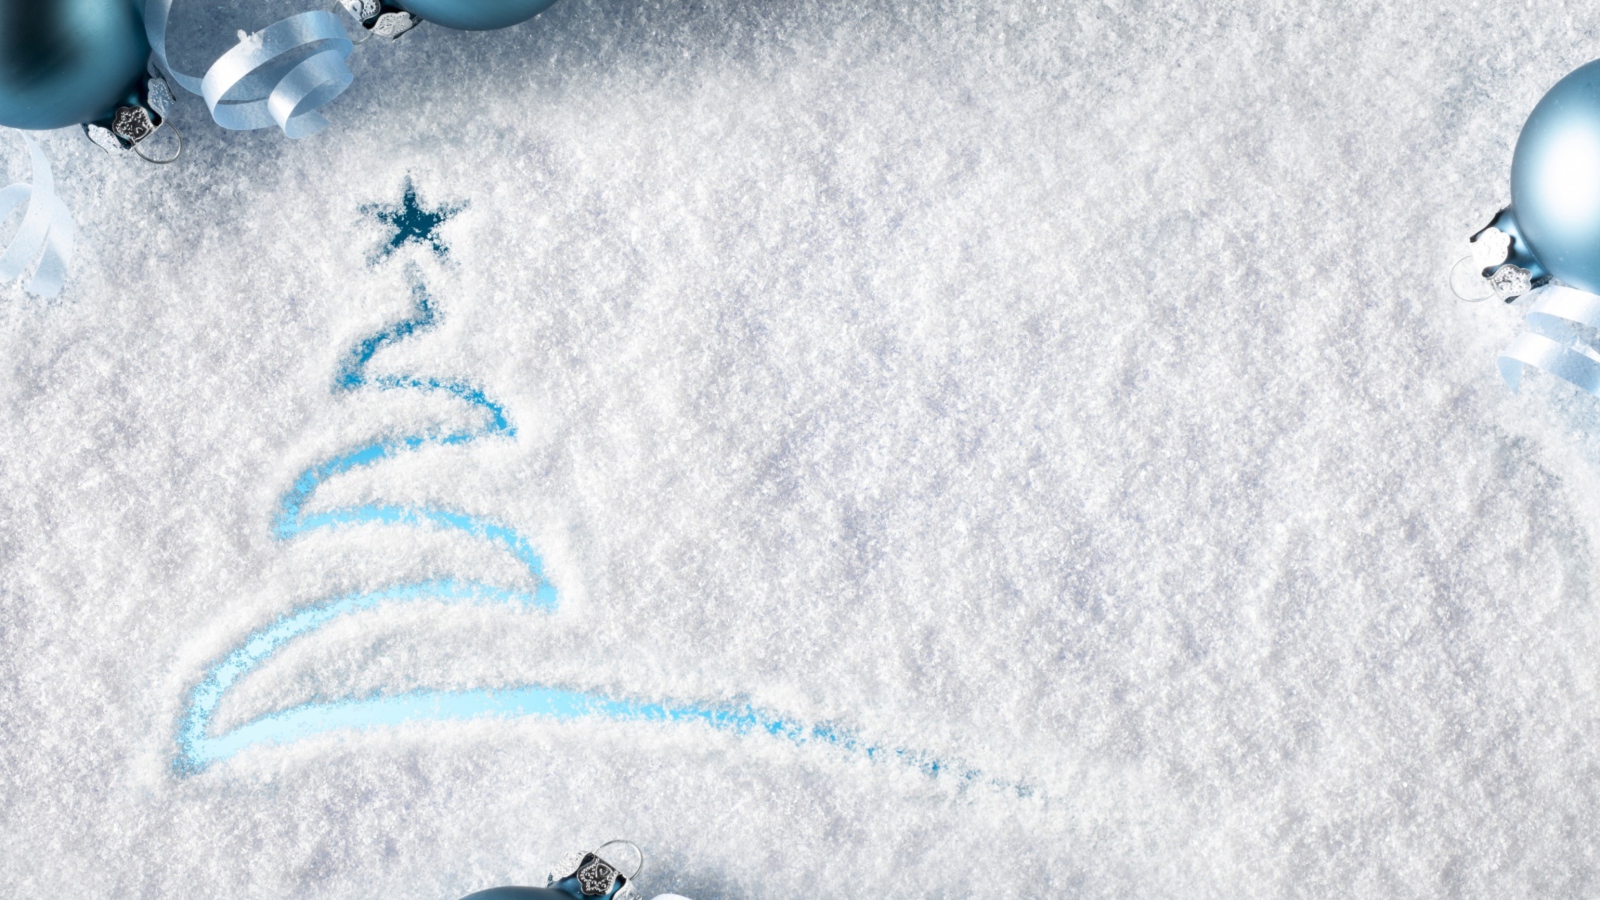 Sfondi Snowy Christmas Tree 1600x900